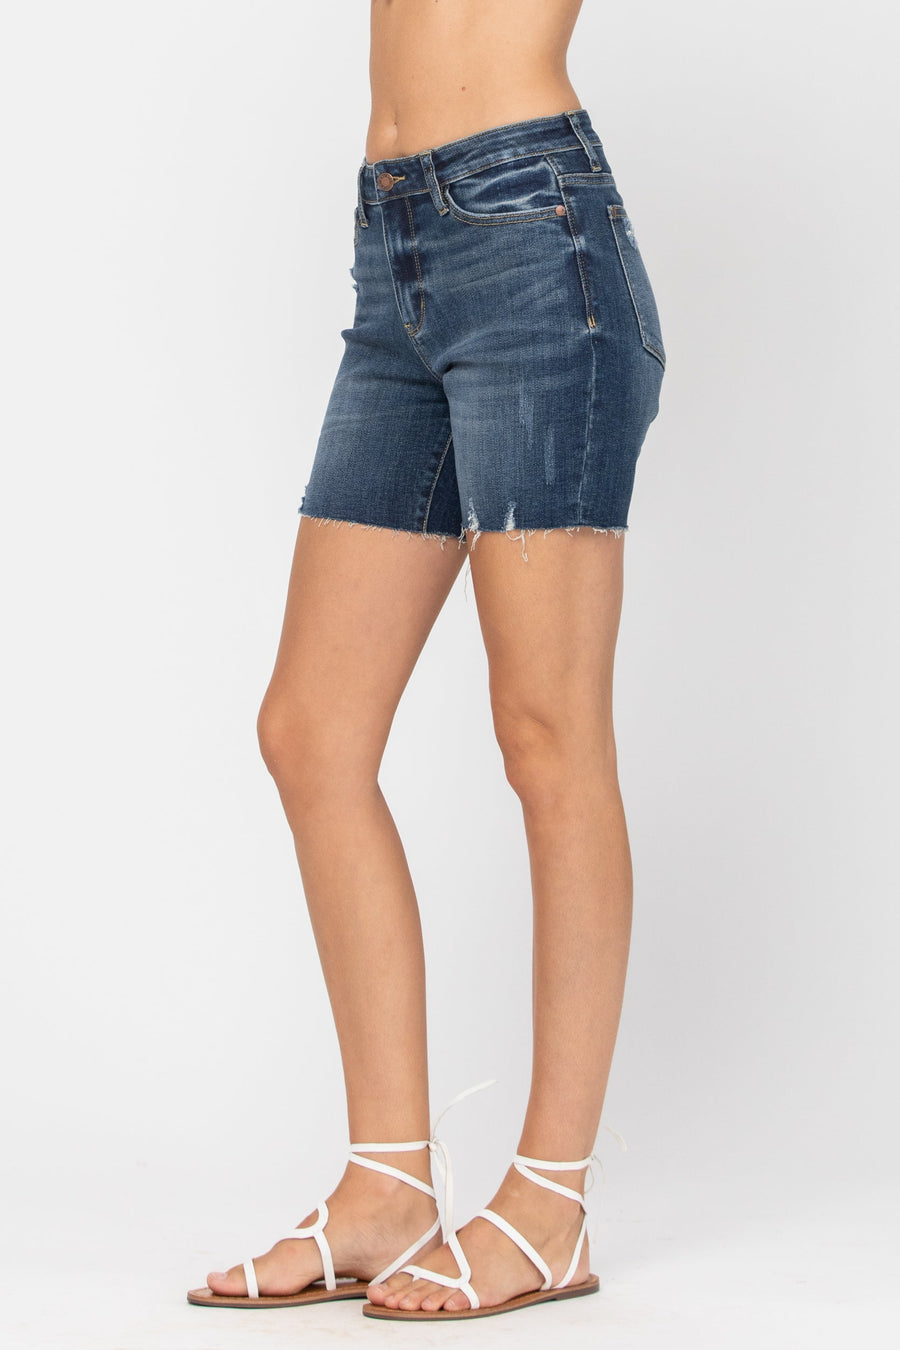 Kayla Mid-Thigh Shorts - PLUS